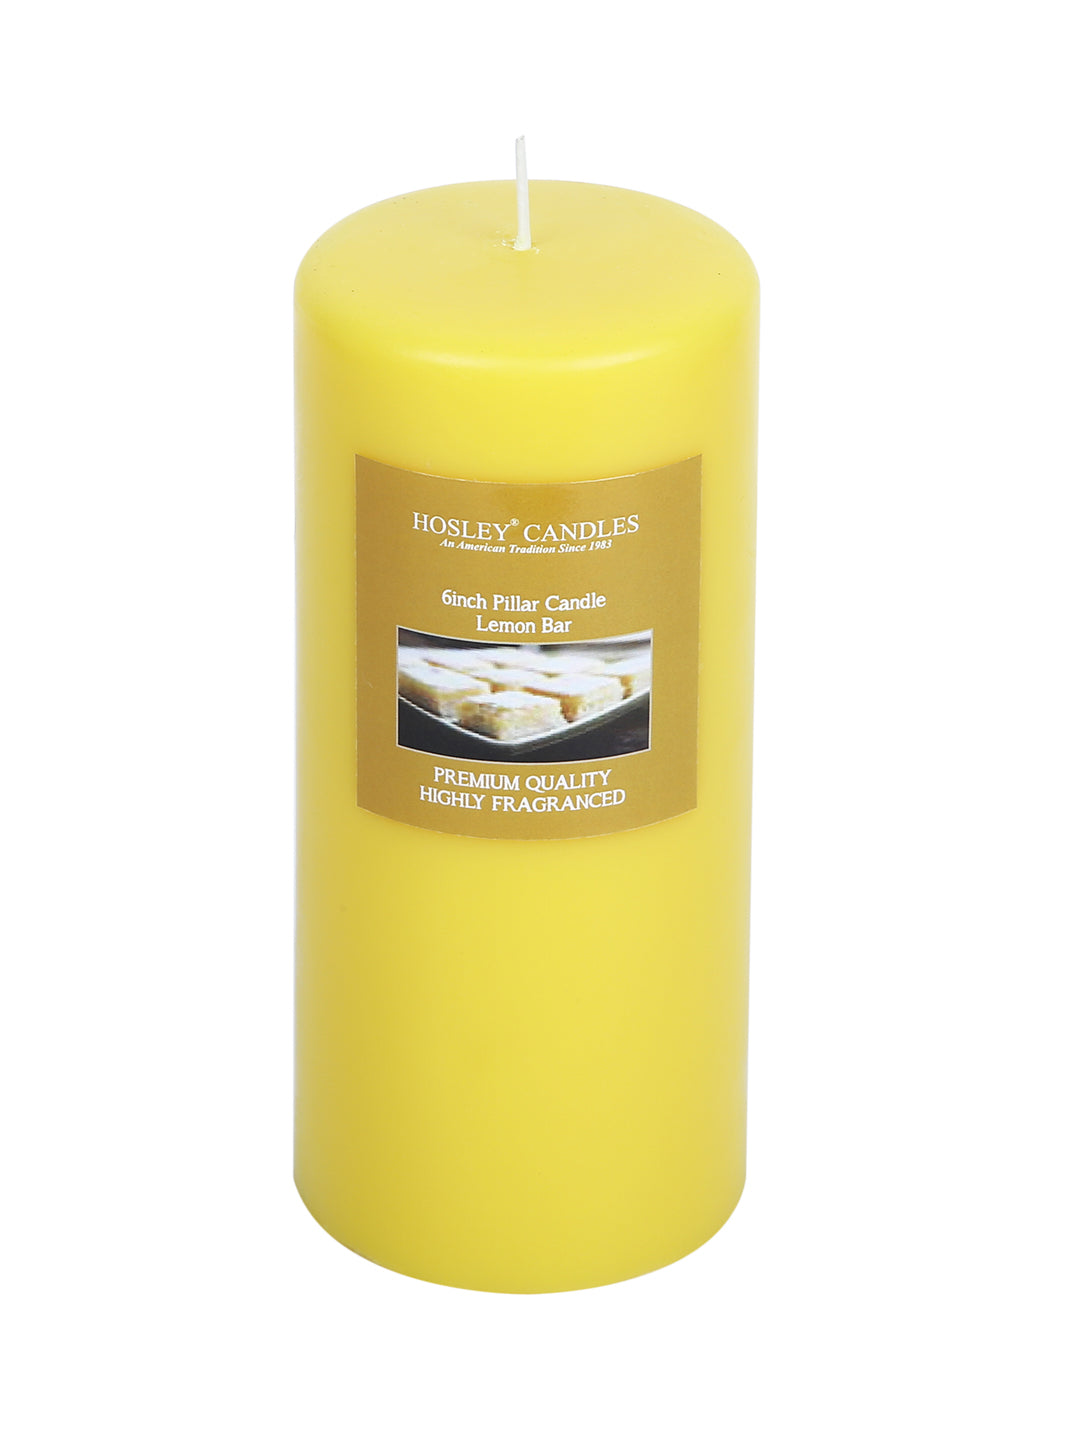 Hosley® Lemon Bar Highly Fragranced 6inch Pillar Candle